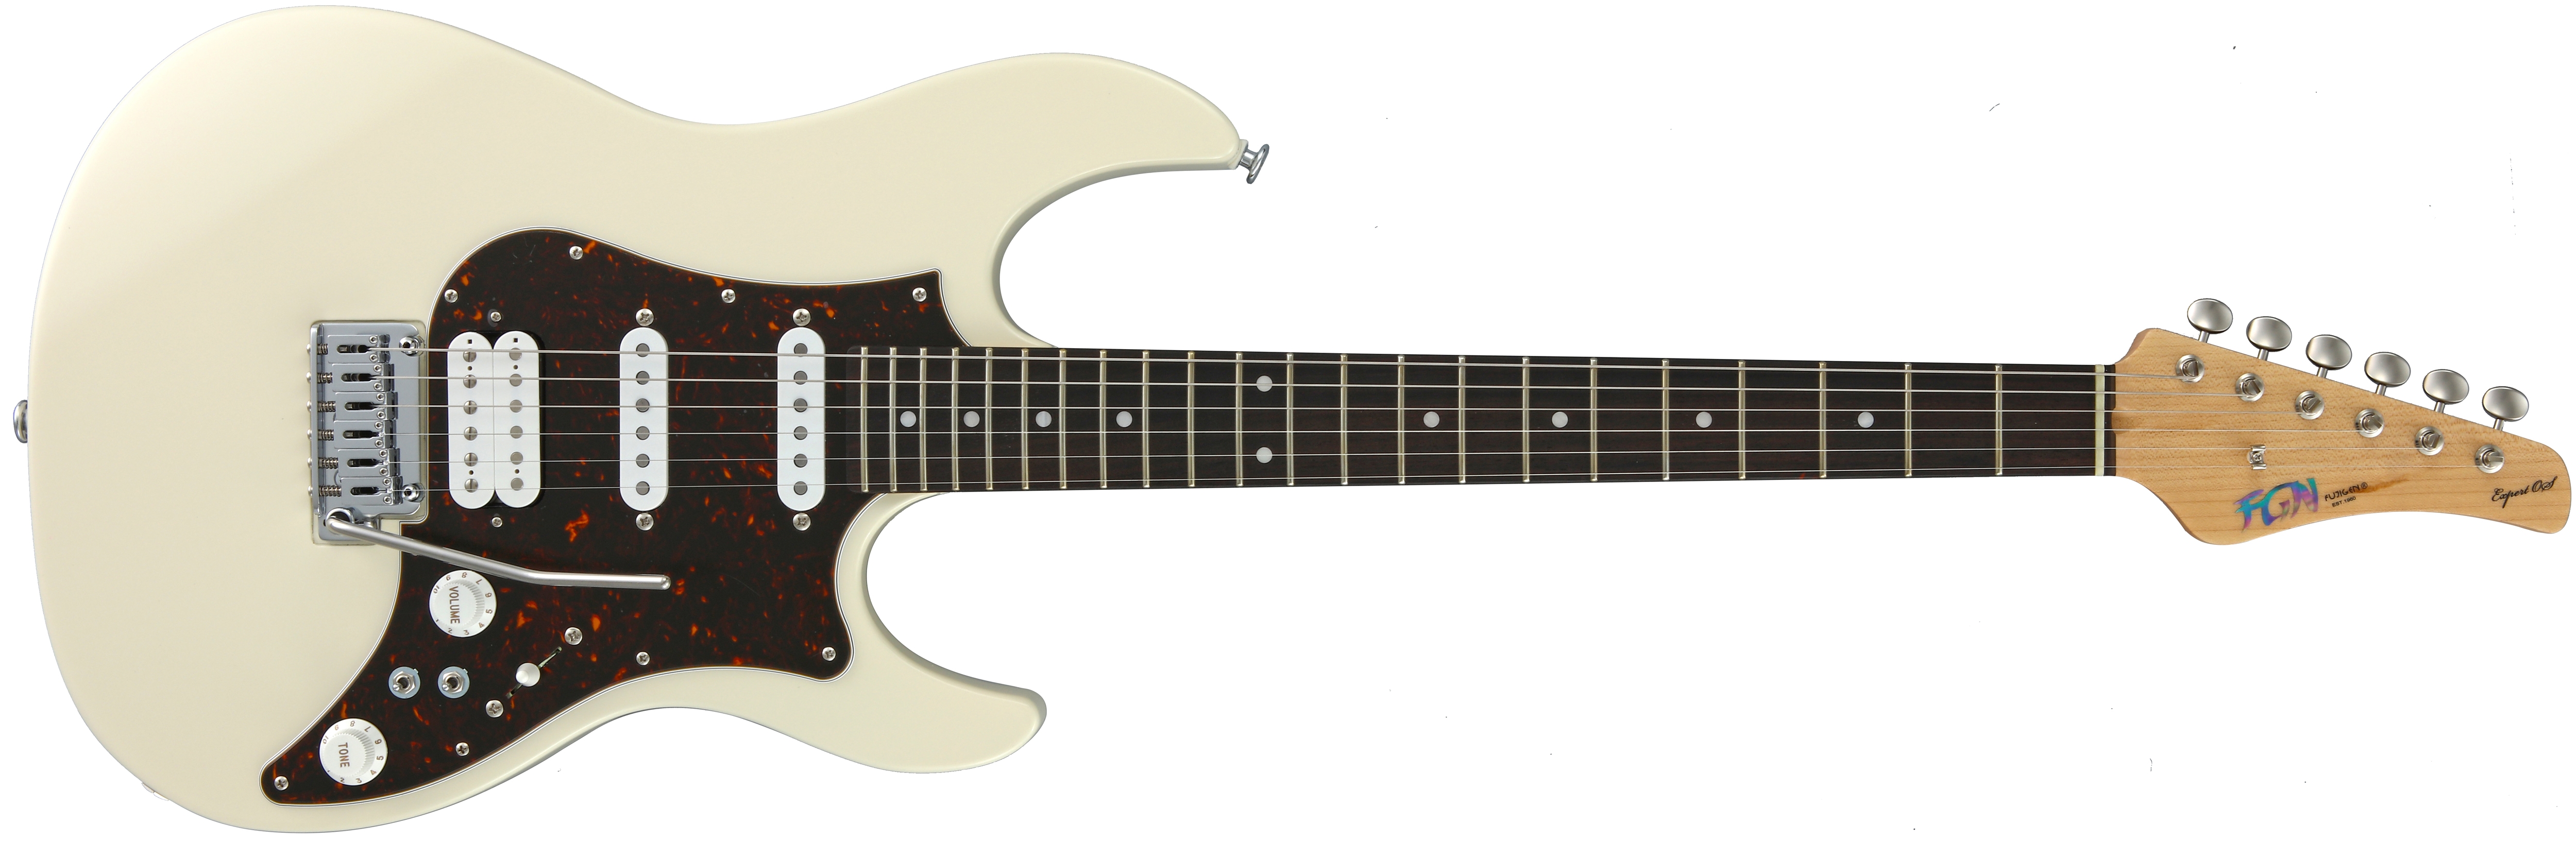 Электрогитара hss. Электрогитара Fender Squier Stratocaster. Ltd SN-200ht SW. Электрогитара Fender Squier Classic Vibe '70s. Электрогитара Squier Contemporary Stratocaster HSS.